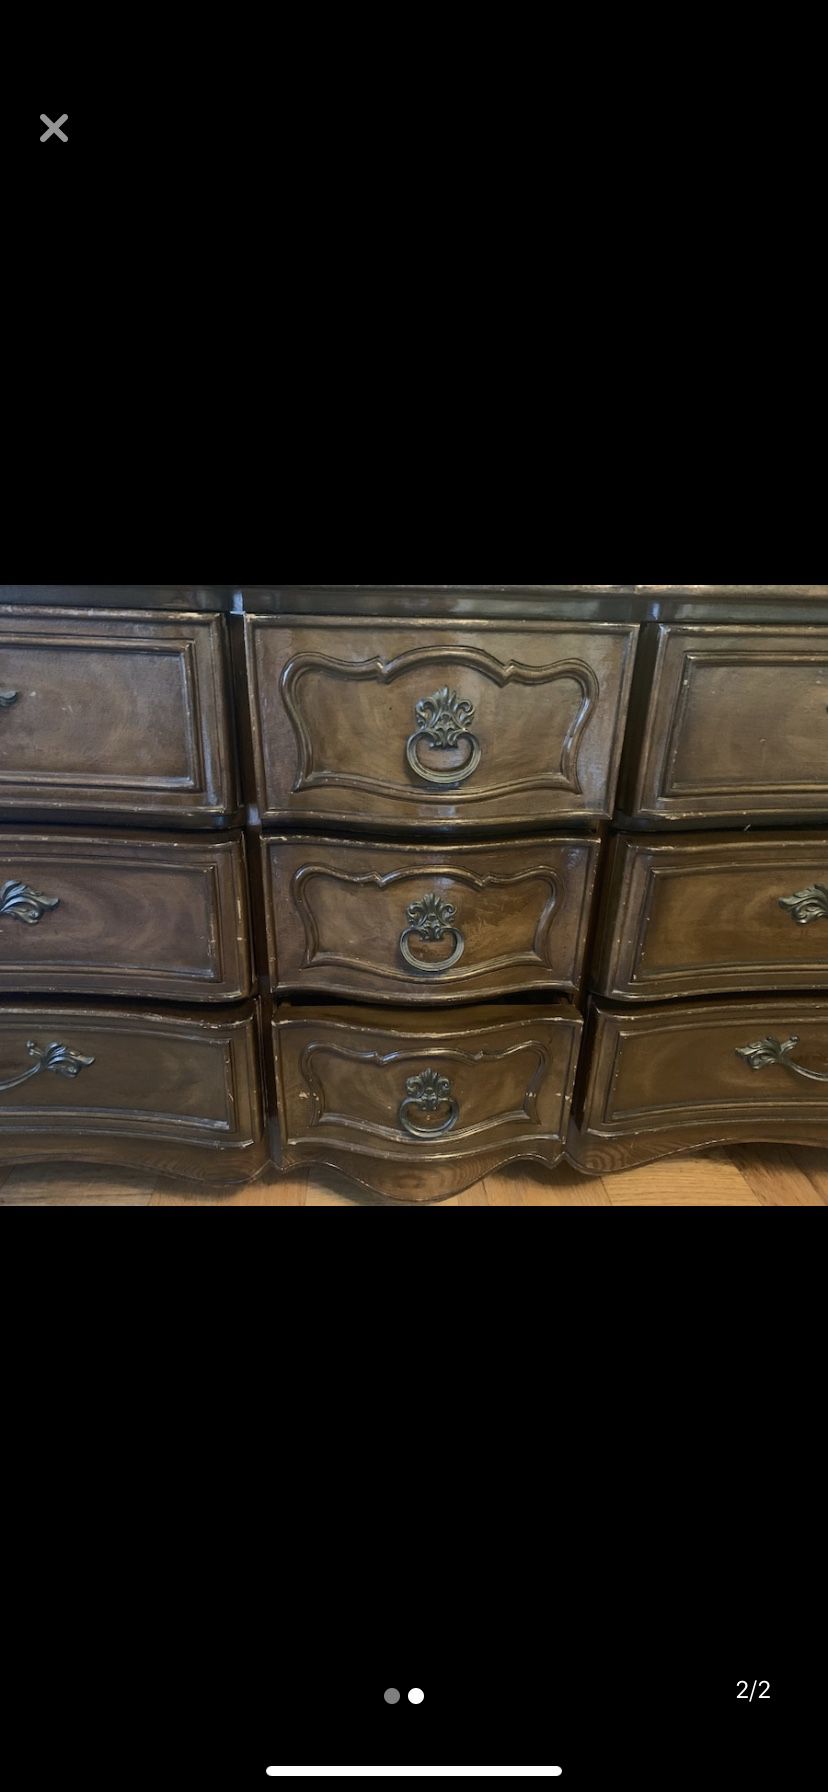 Gorgeous Antique Dresser